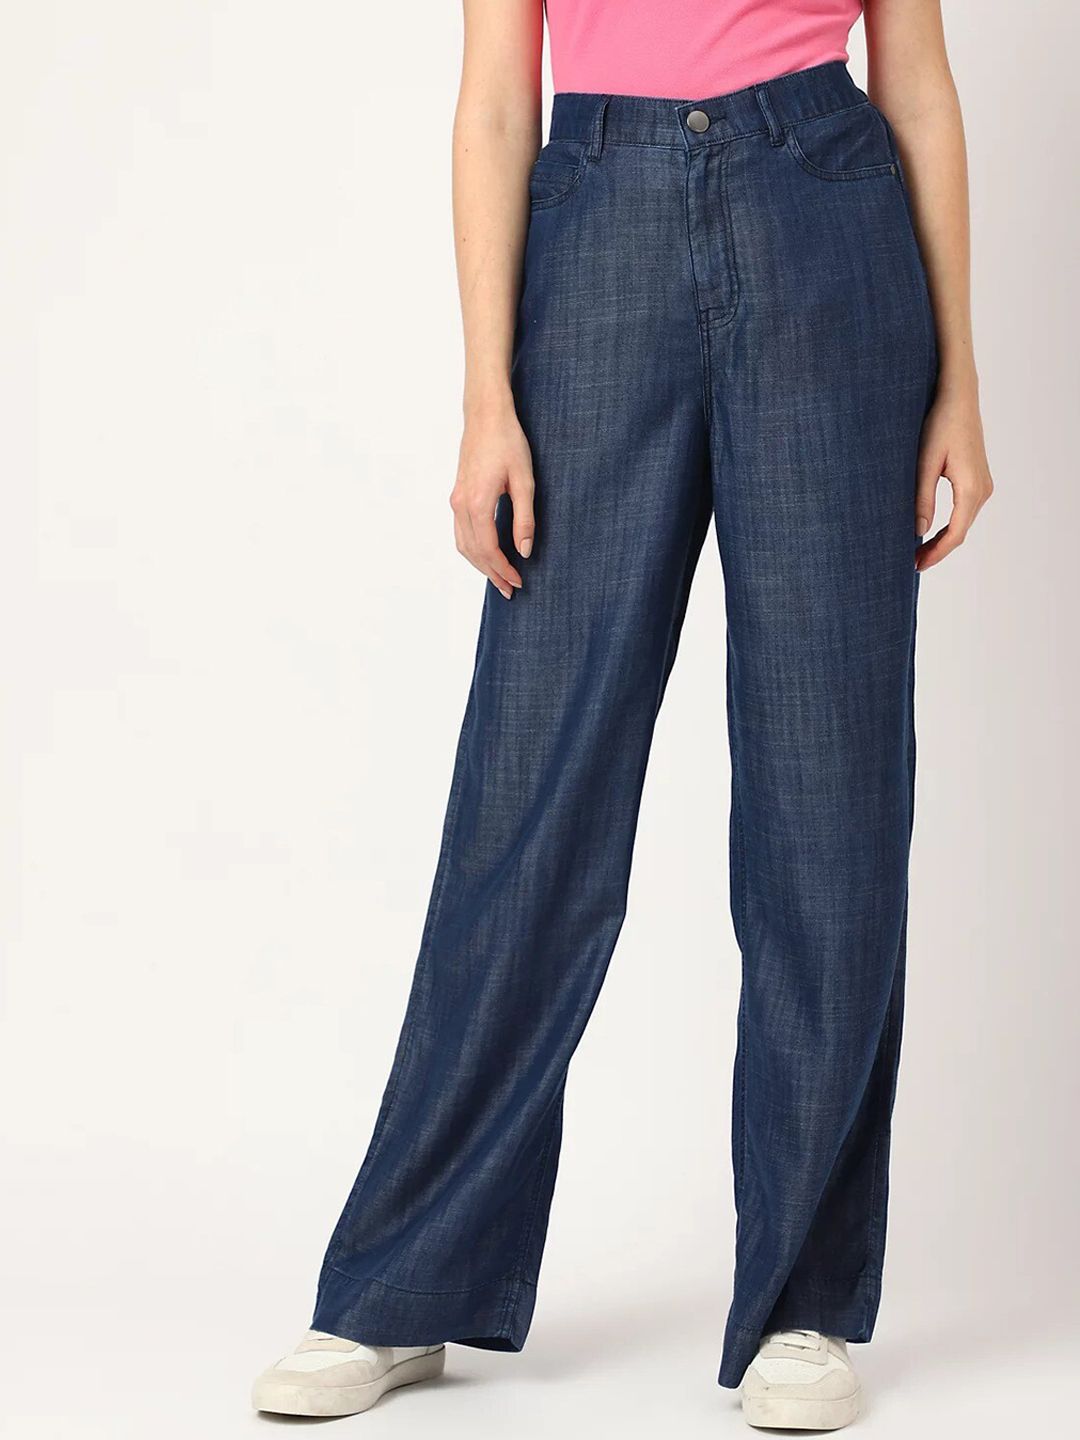 Buy Brown Trousers  Pants for Men by Marks  Spencer Online  Ajiocom